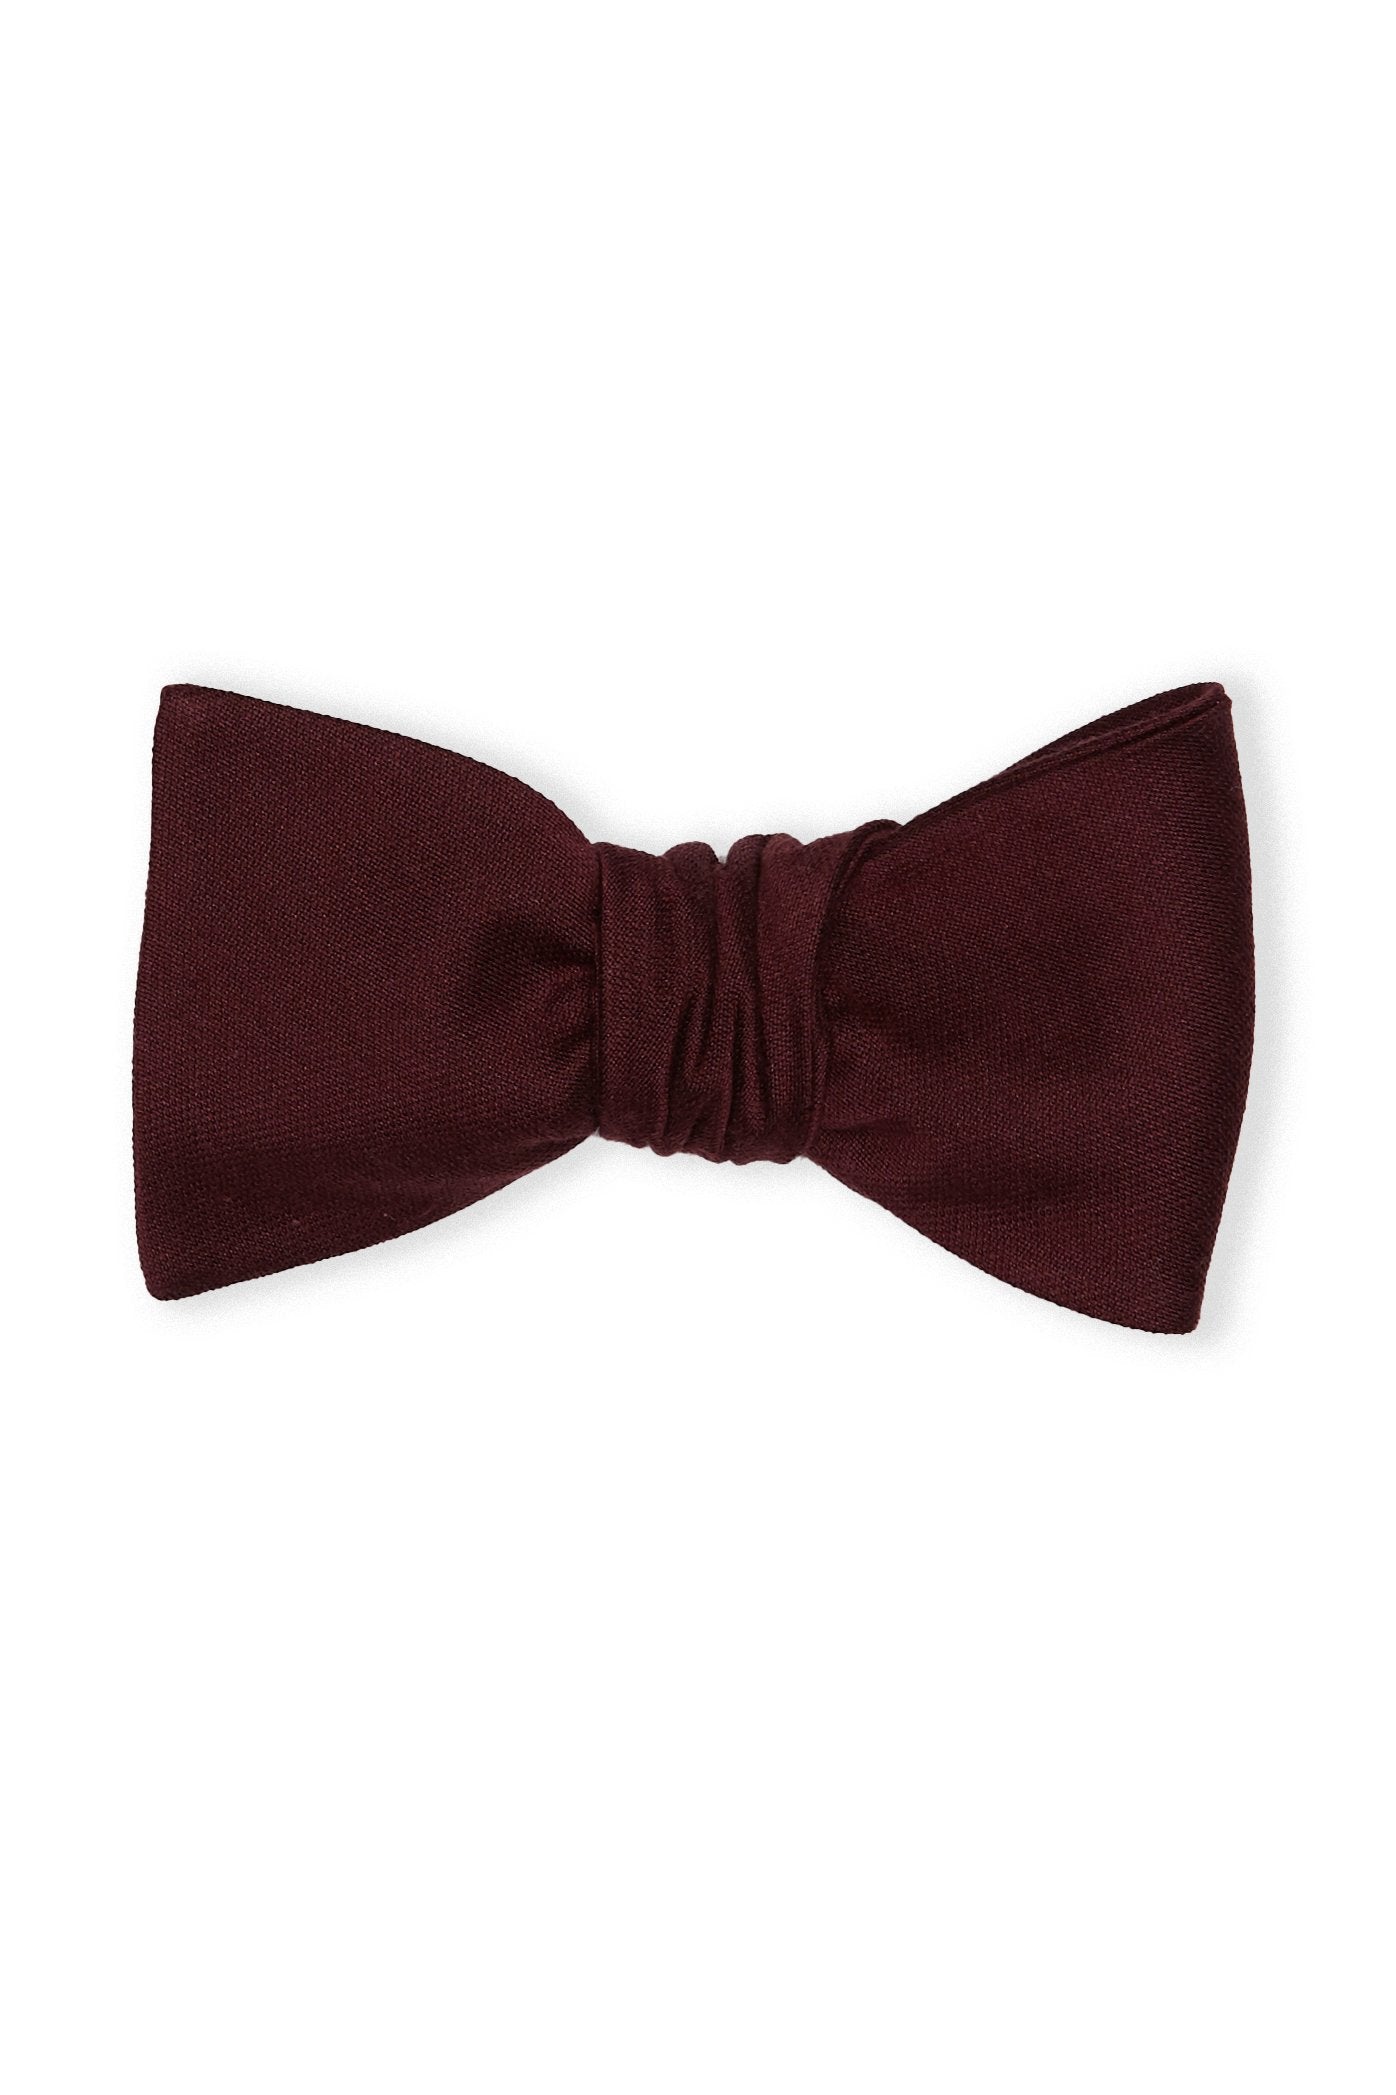 Daniel Bow Tie in cabernet burgundy by Birdy Grey, front view